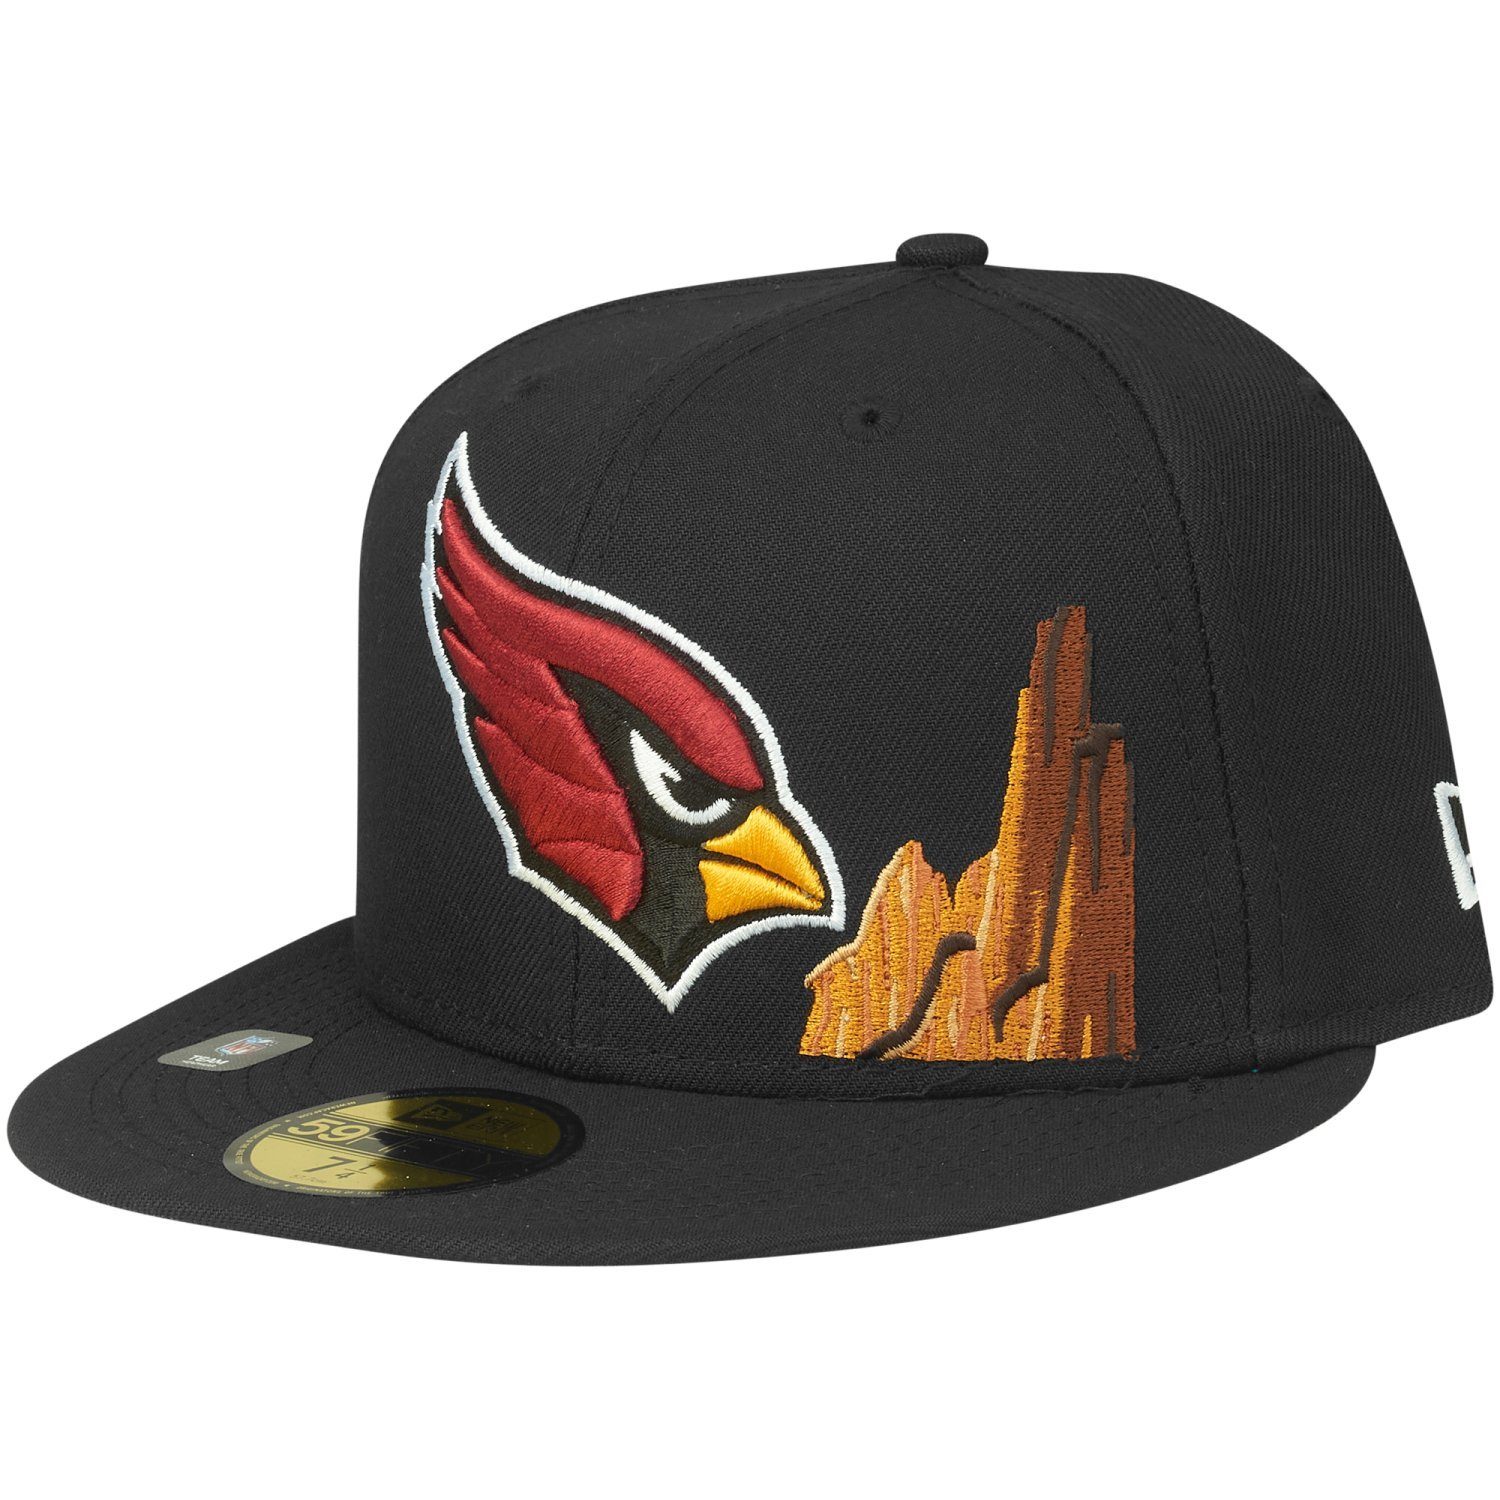 New Era Fitted Cap 59Fifty NFL CITY Arizona Cardinals